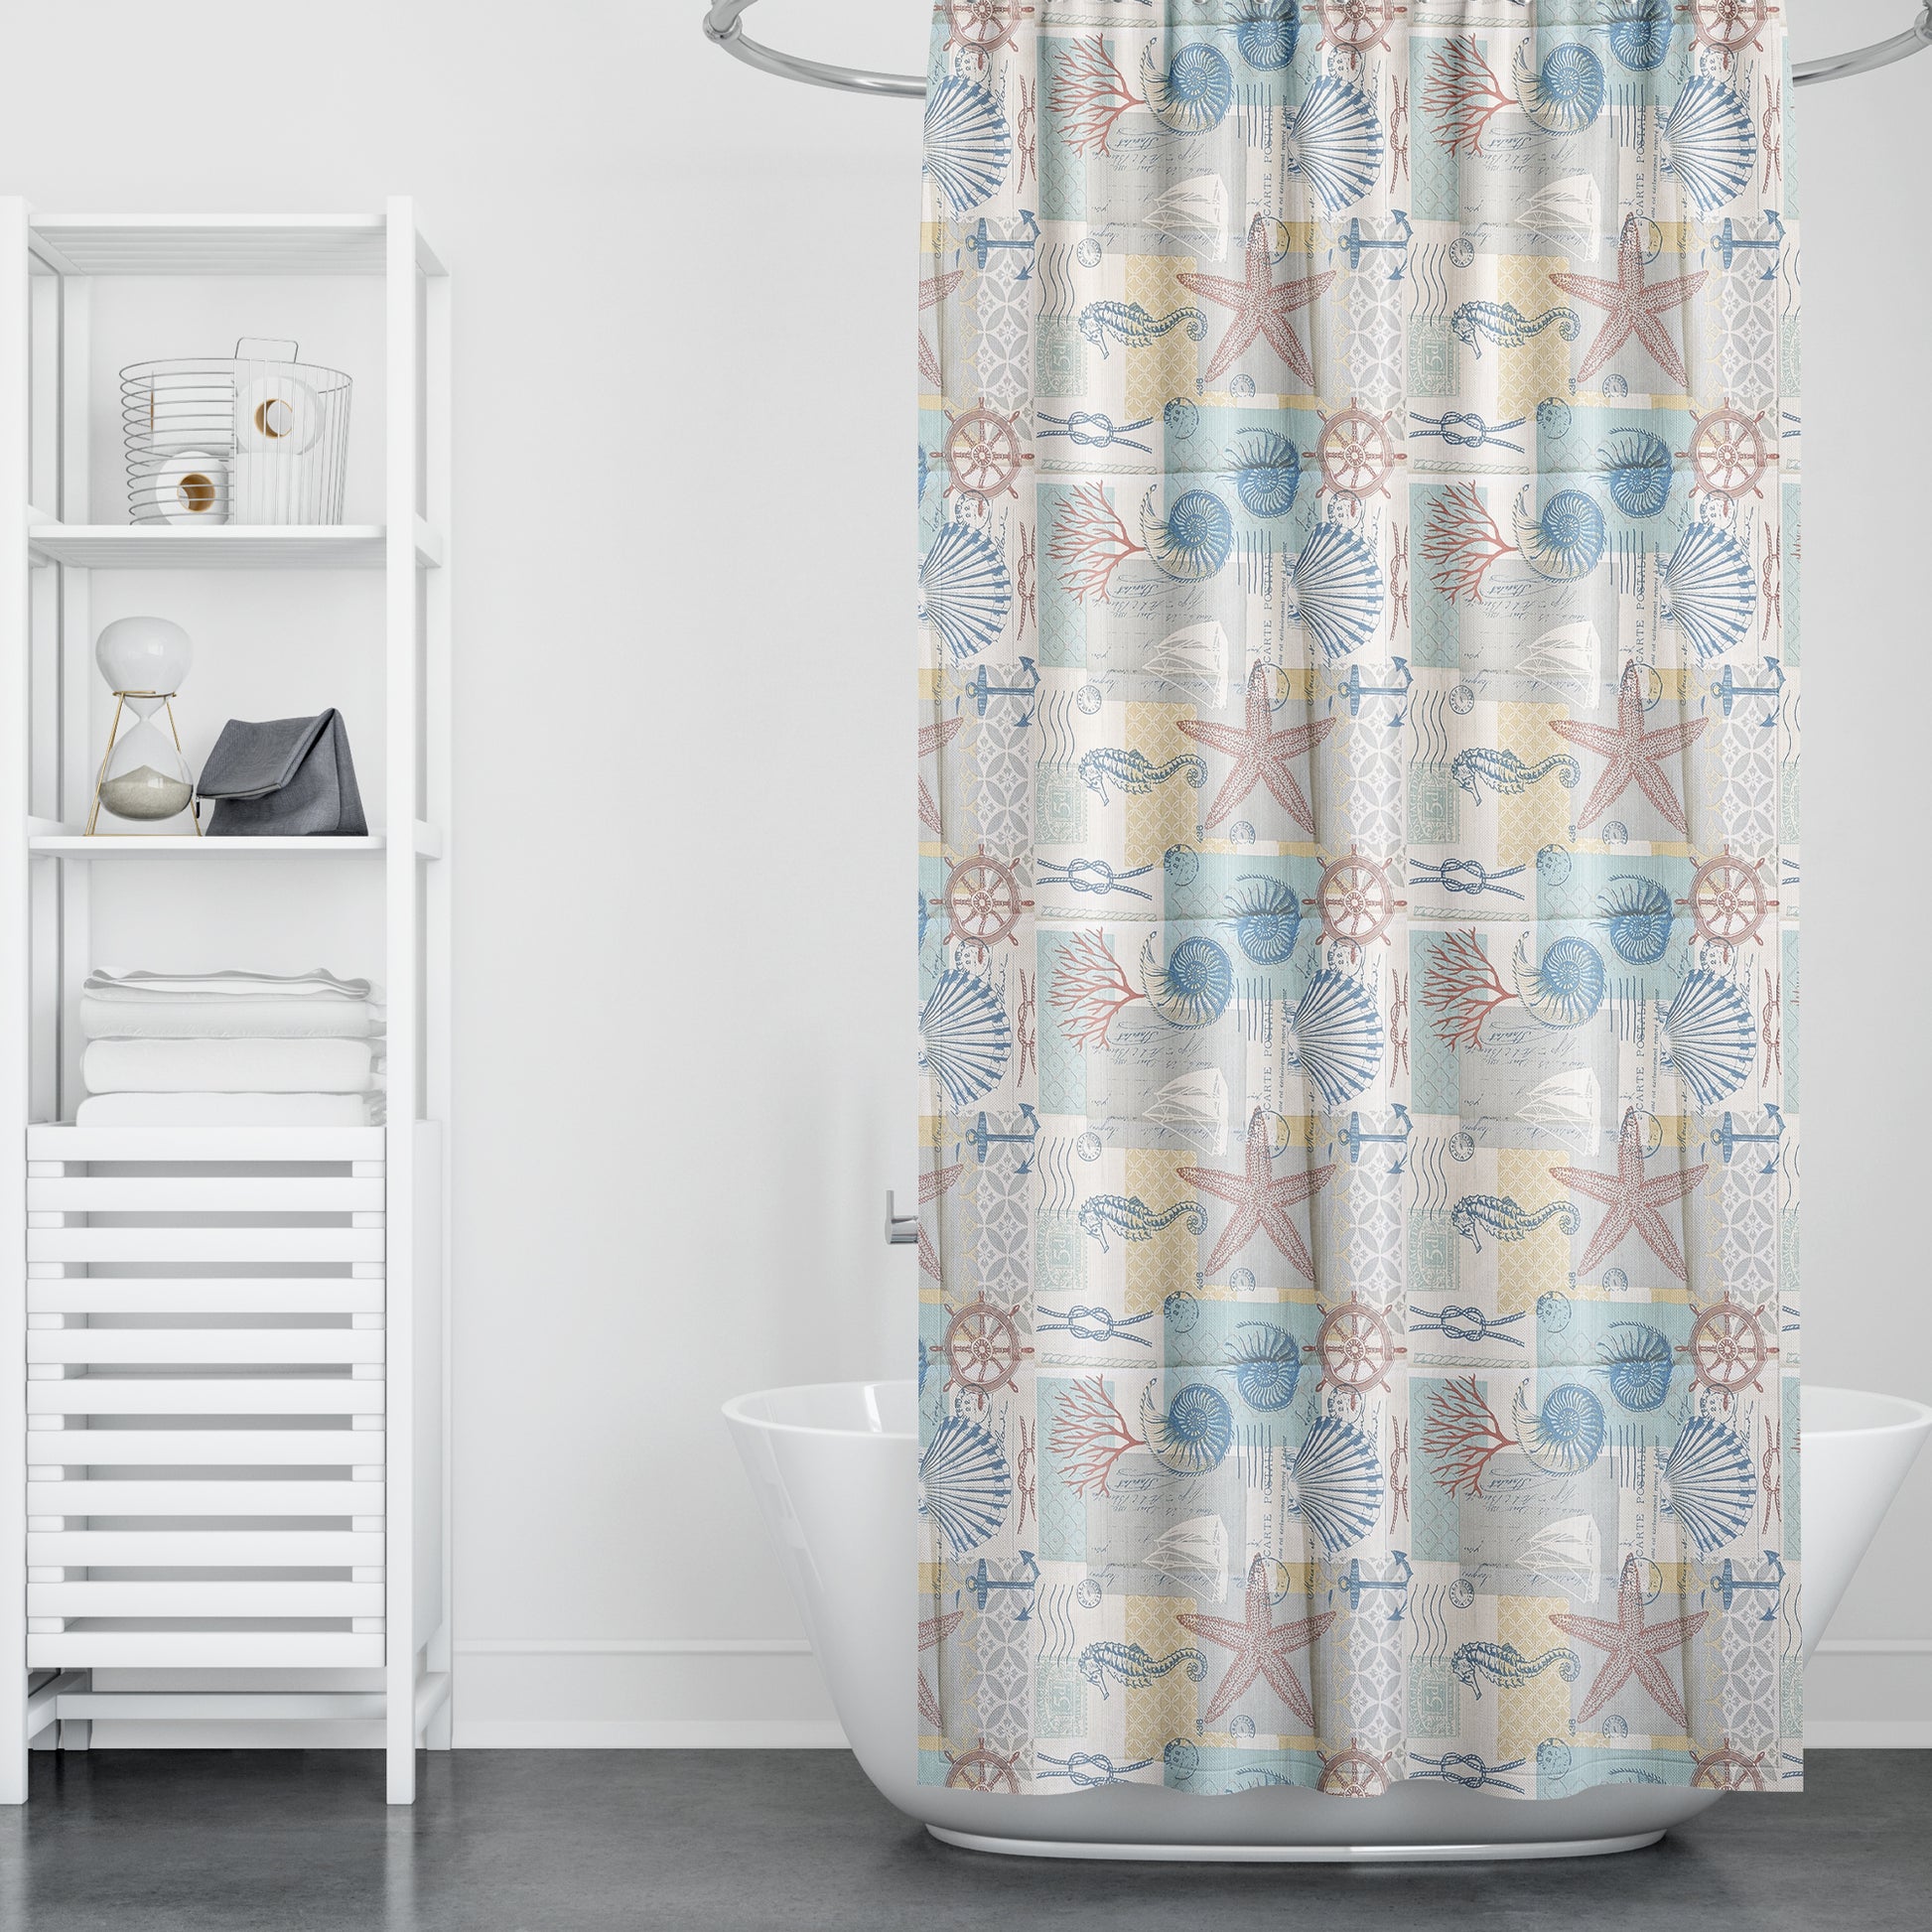 Shower curtains for bathroom